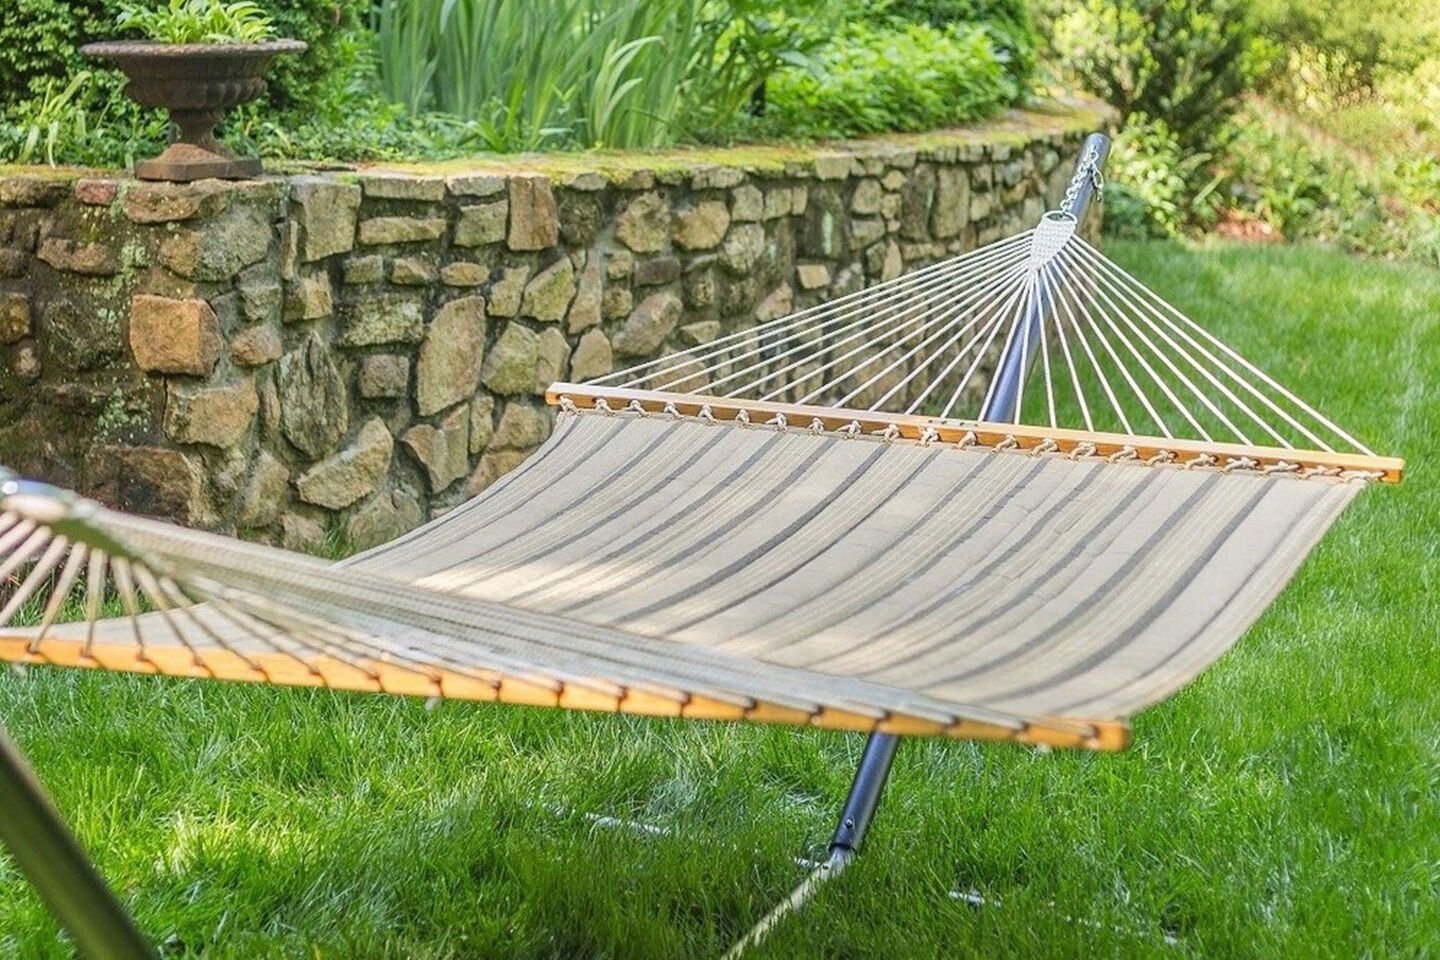 Padded hammock in backyard on bright green grass